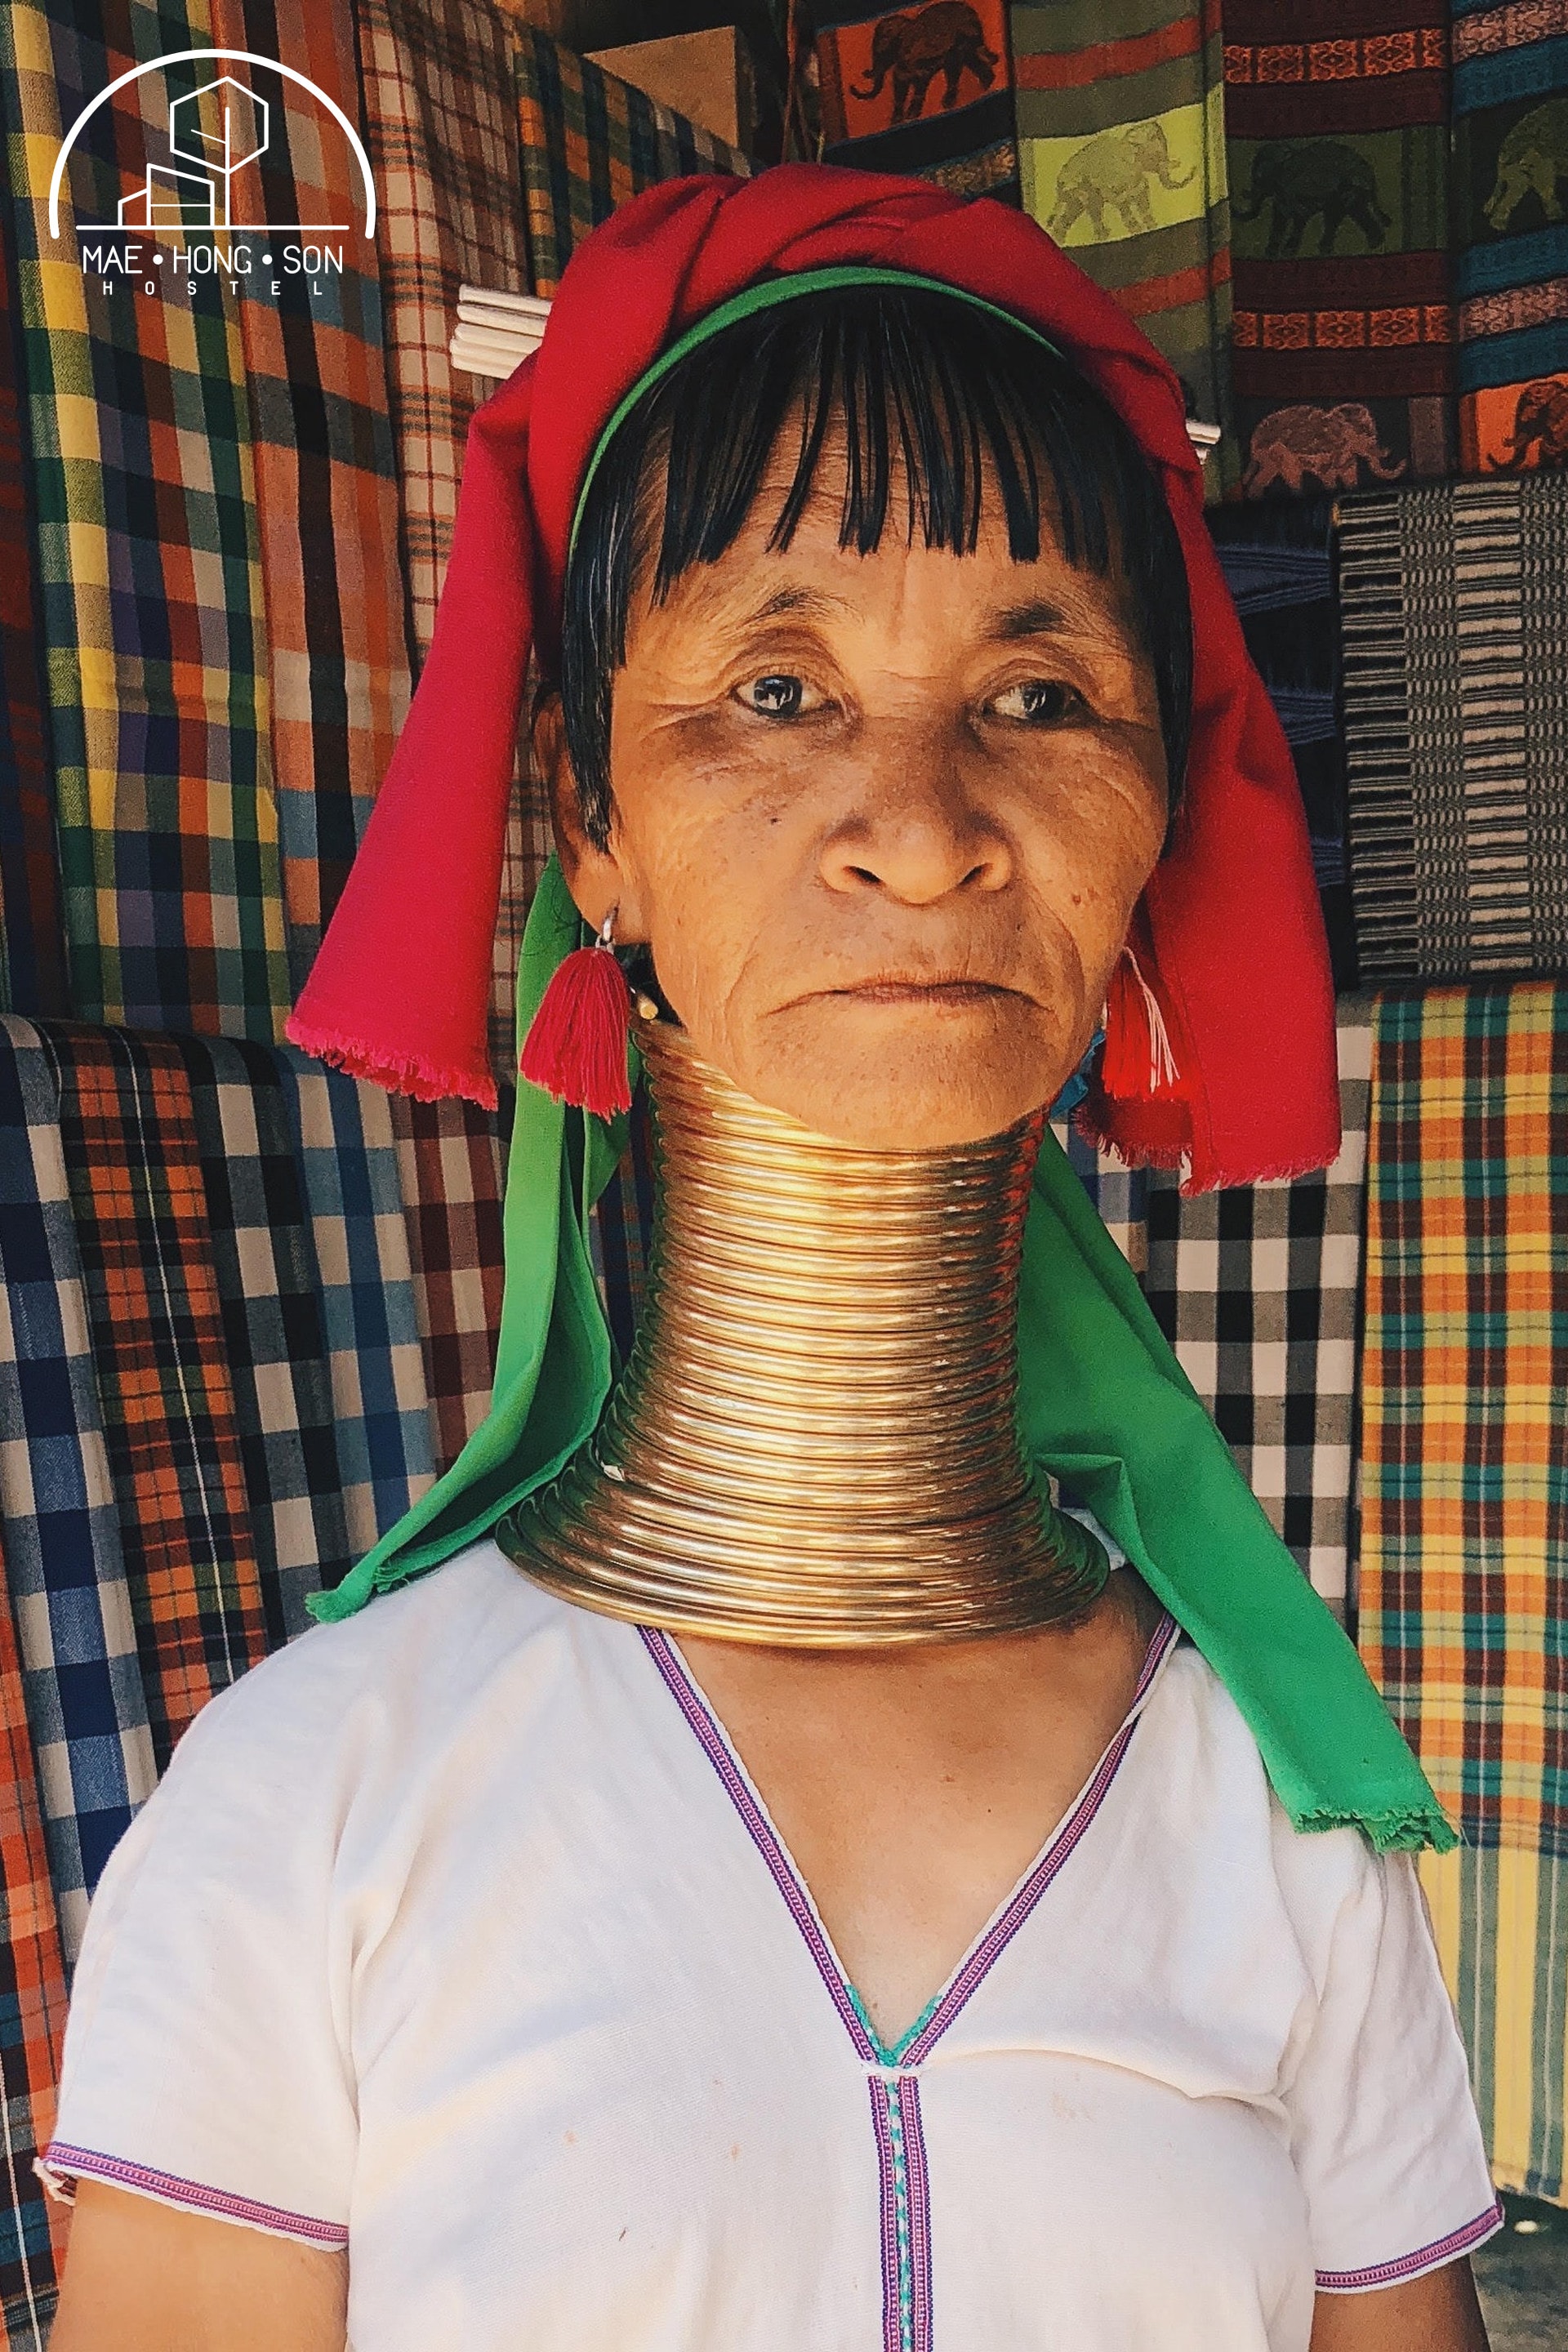 Long Neck Child | Karen girl with brass rings spiral coiled … | Flickr